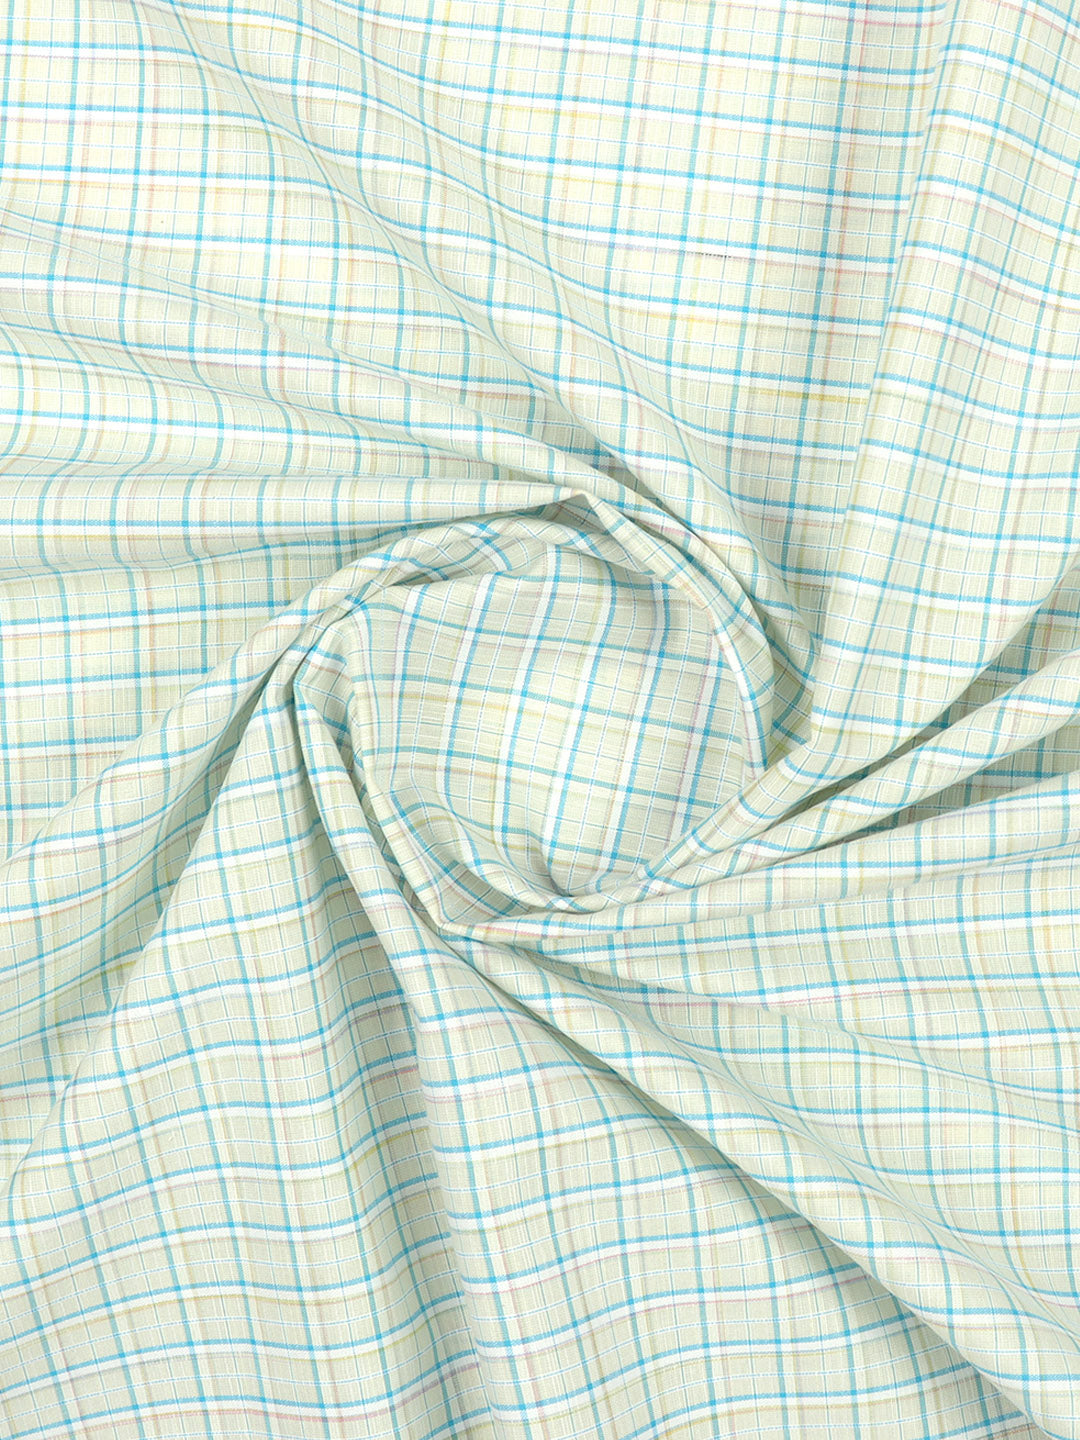 Cotton Blend Light Green & Blue Colour Checked Shirt Fabric Elight Gold